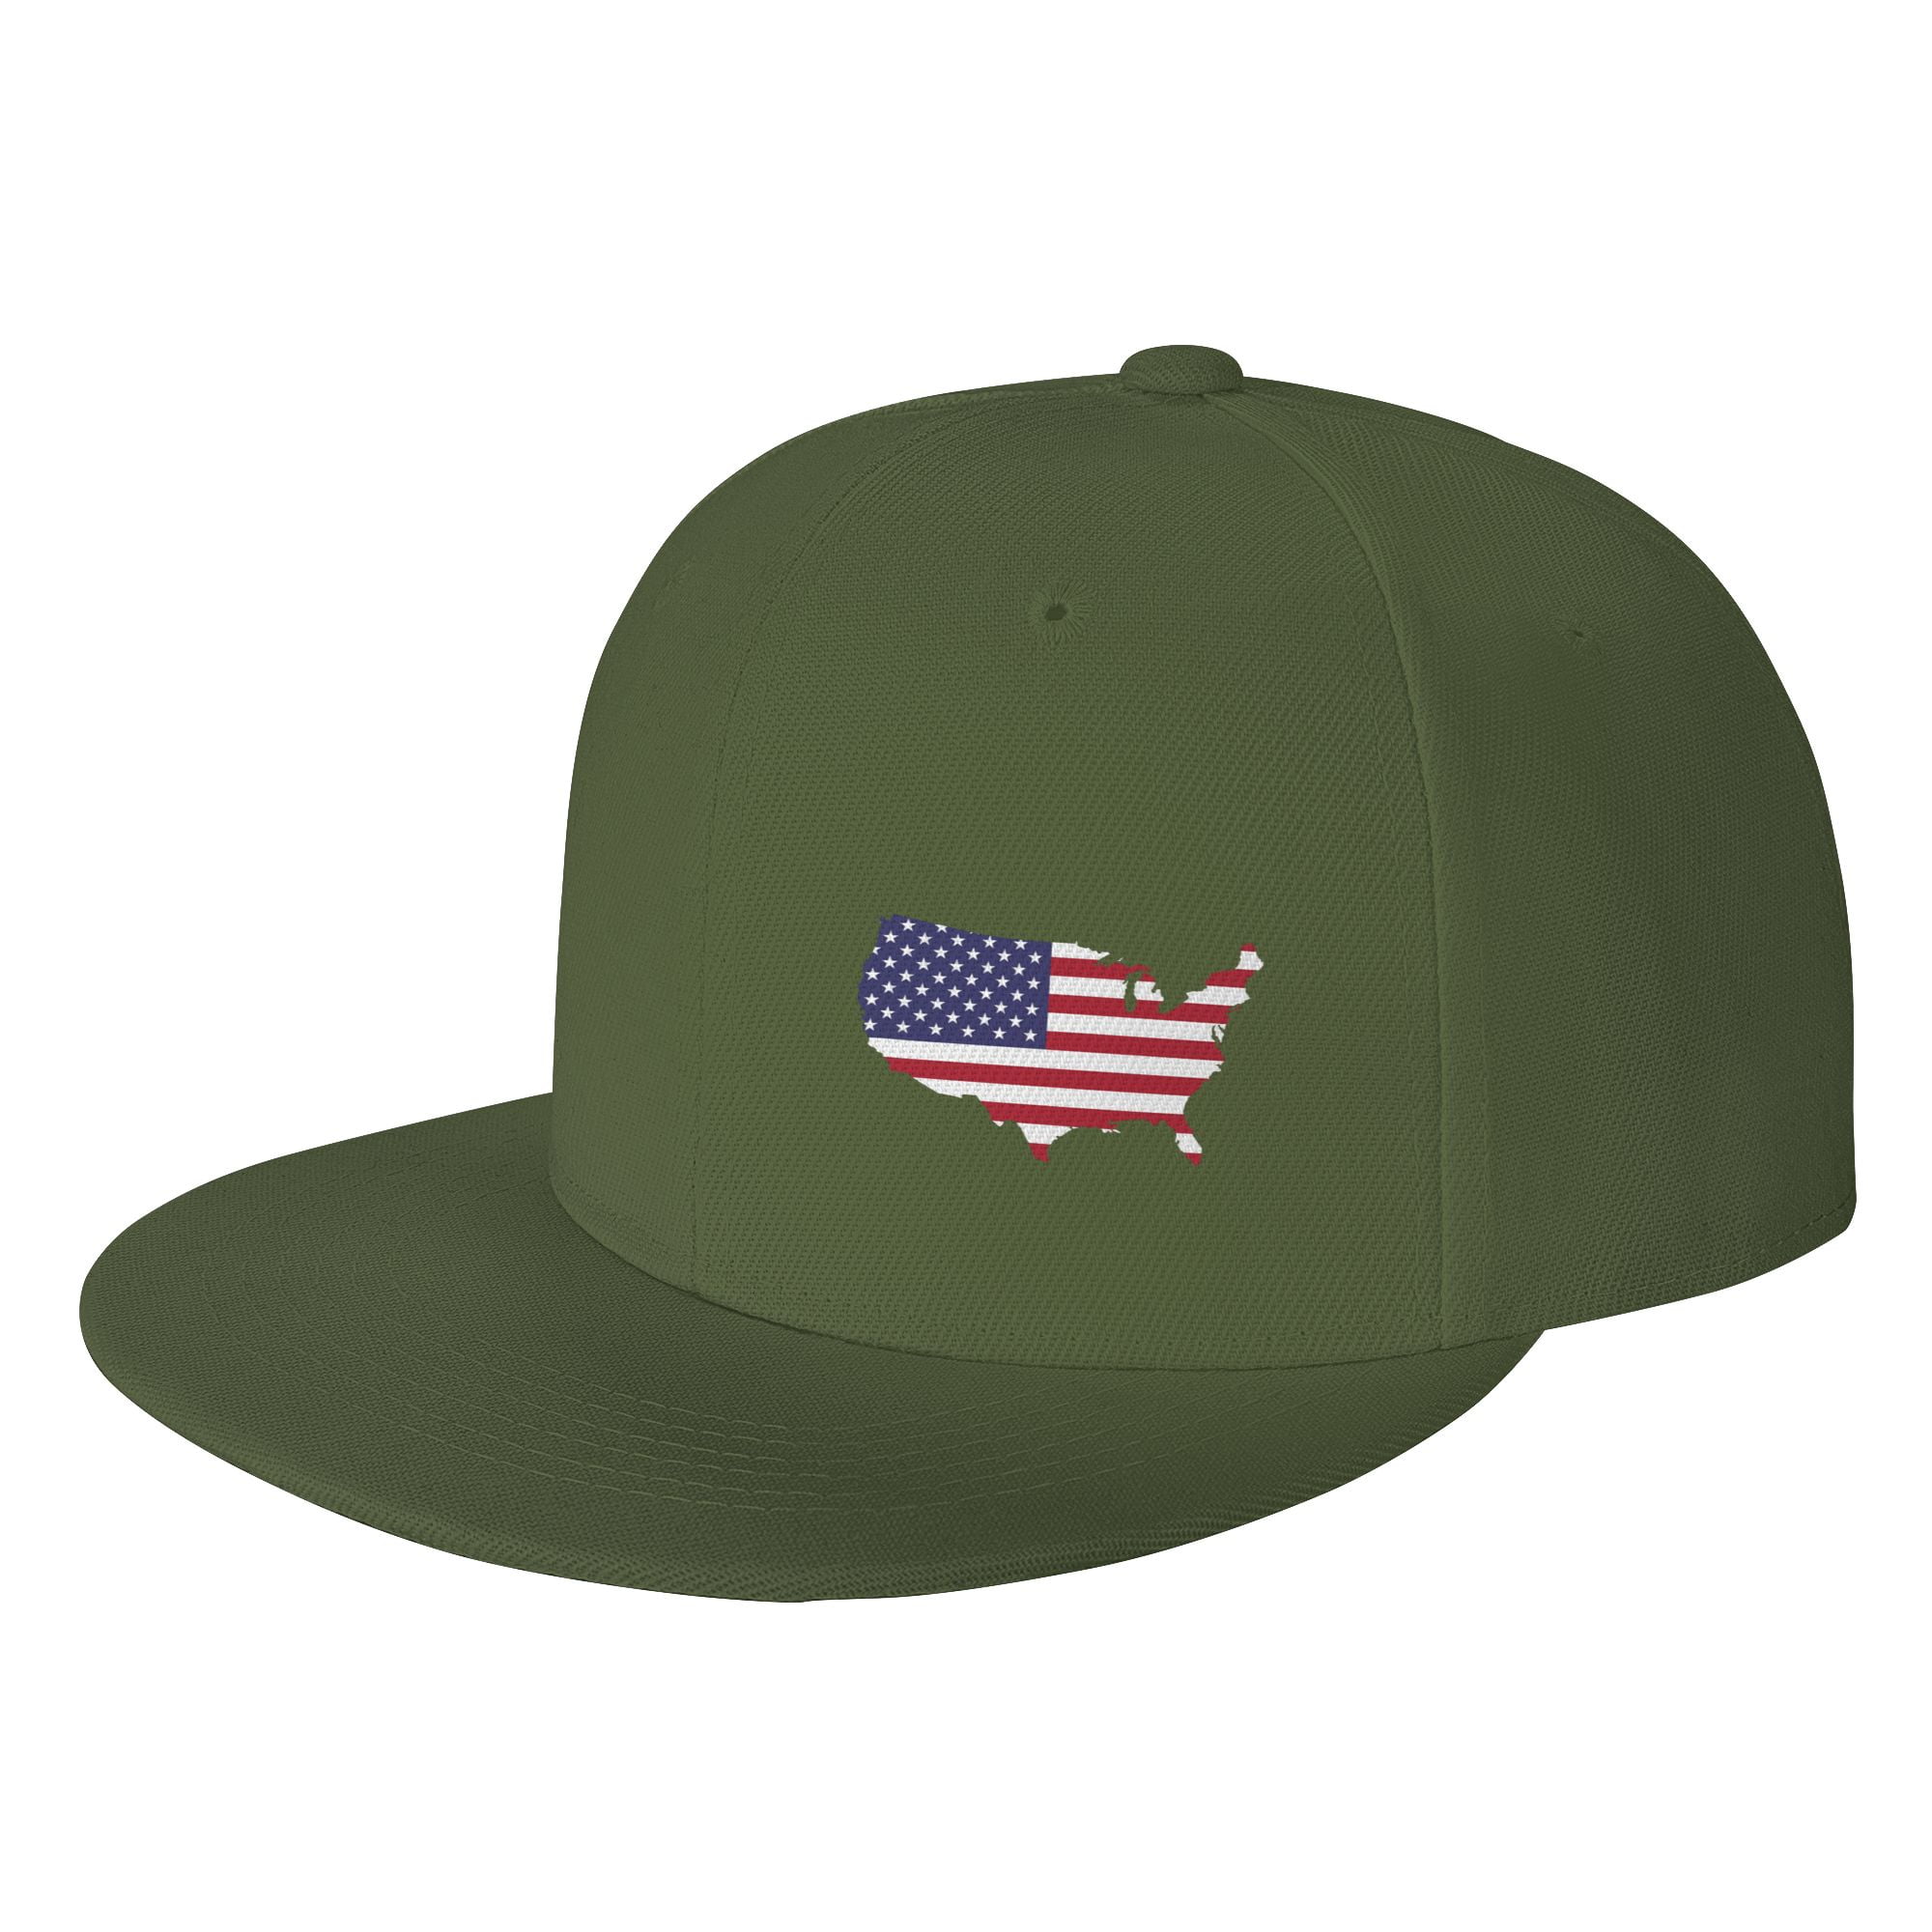 TEQUAN Flat Brim Hat Snapback Hats, America Country Flag Pattern